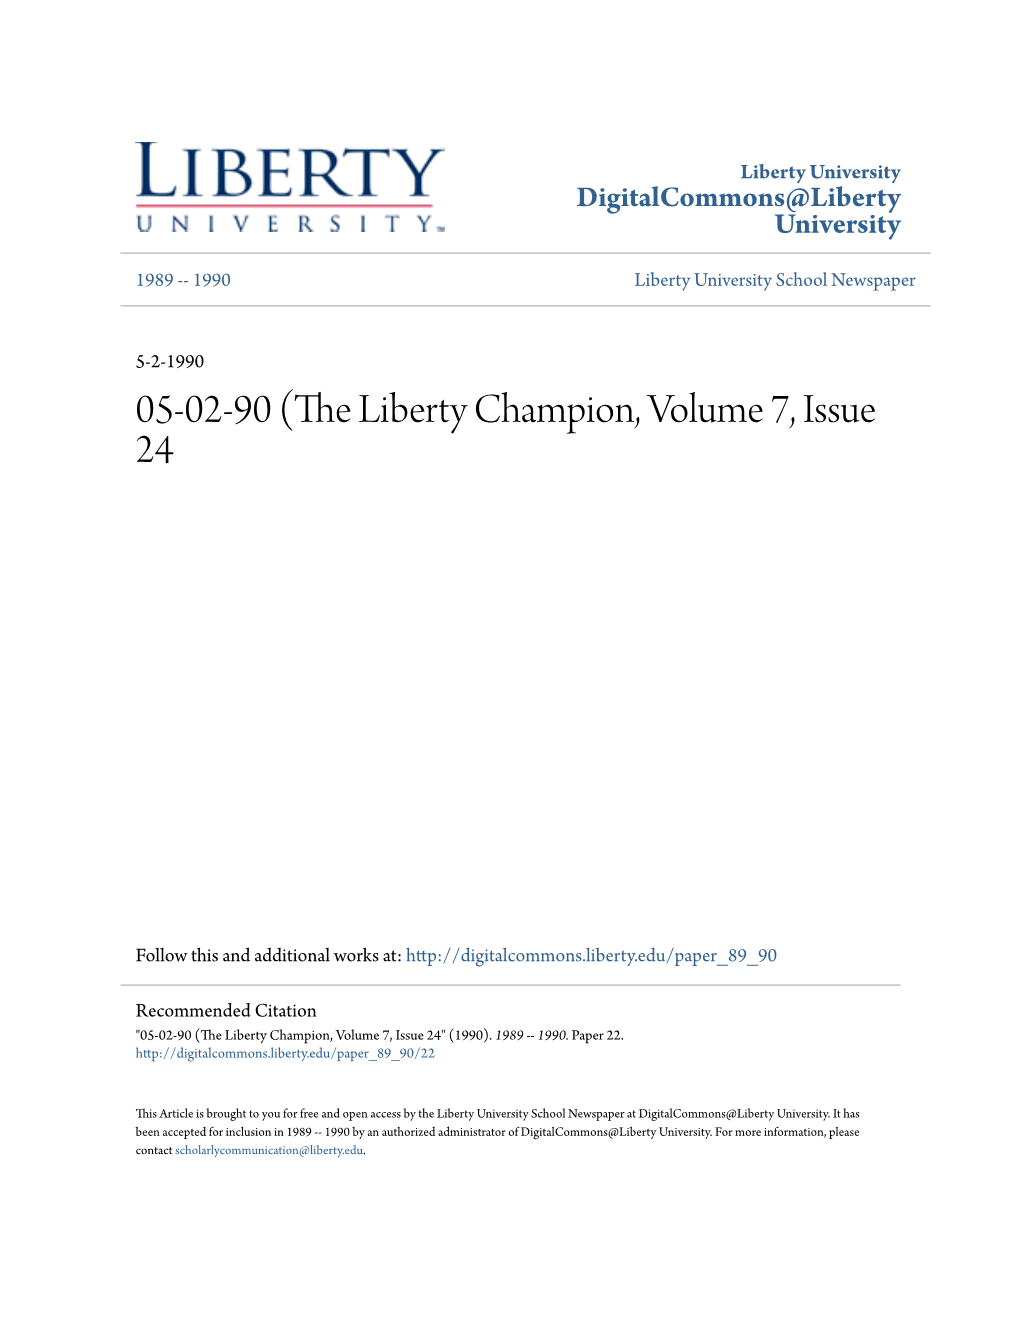 The Liberty Champion, Volume 7, Issue 24